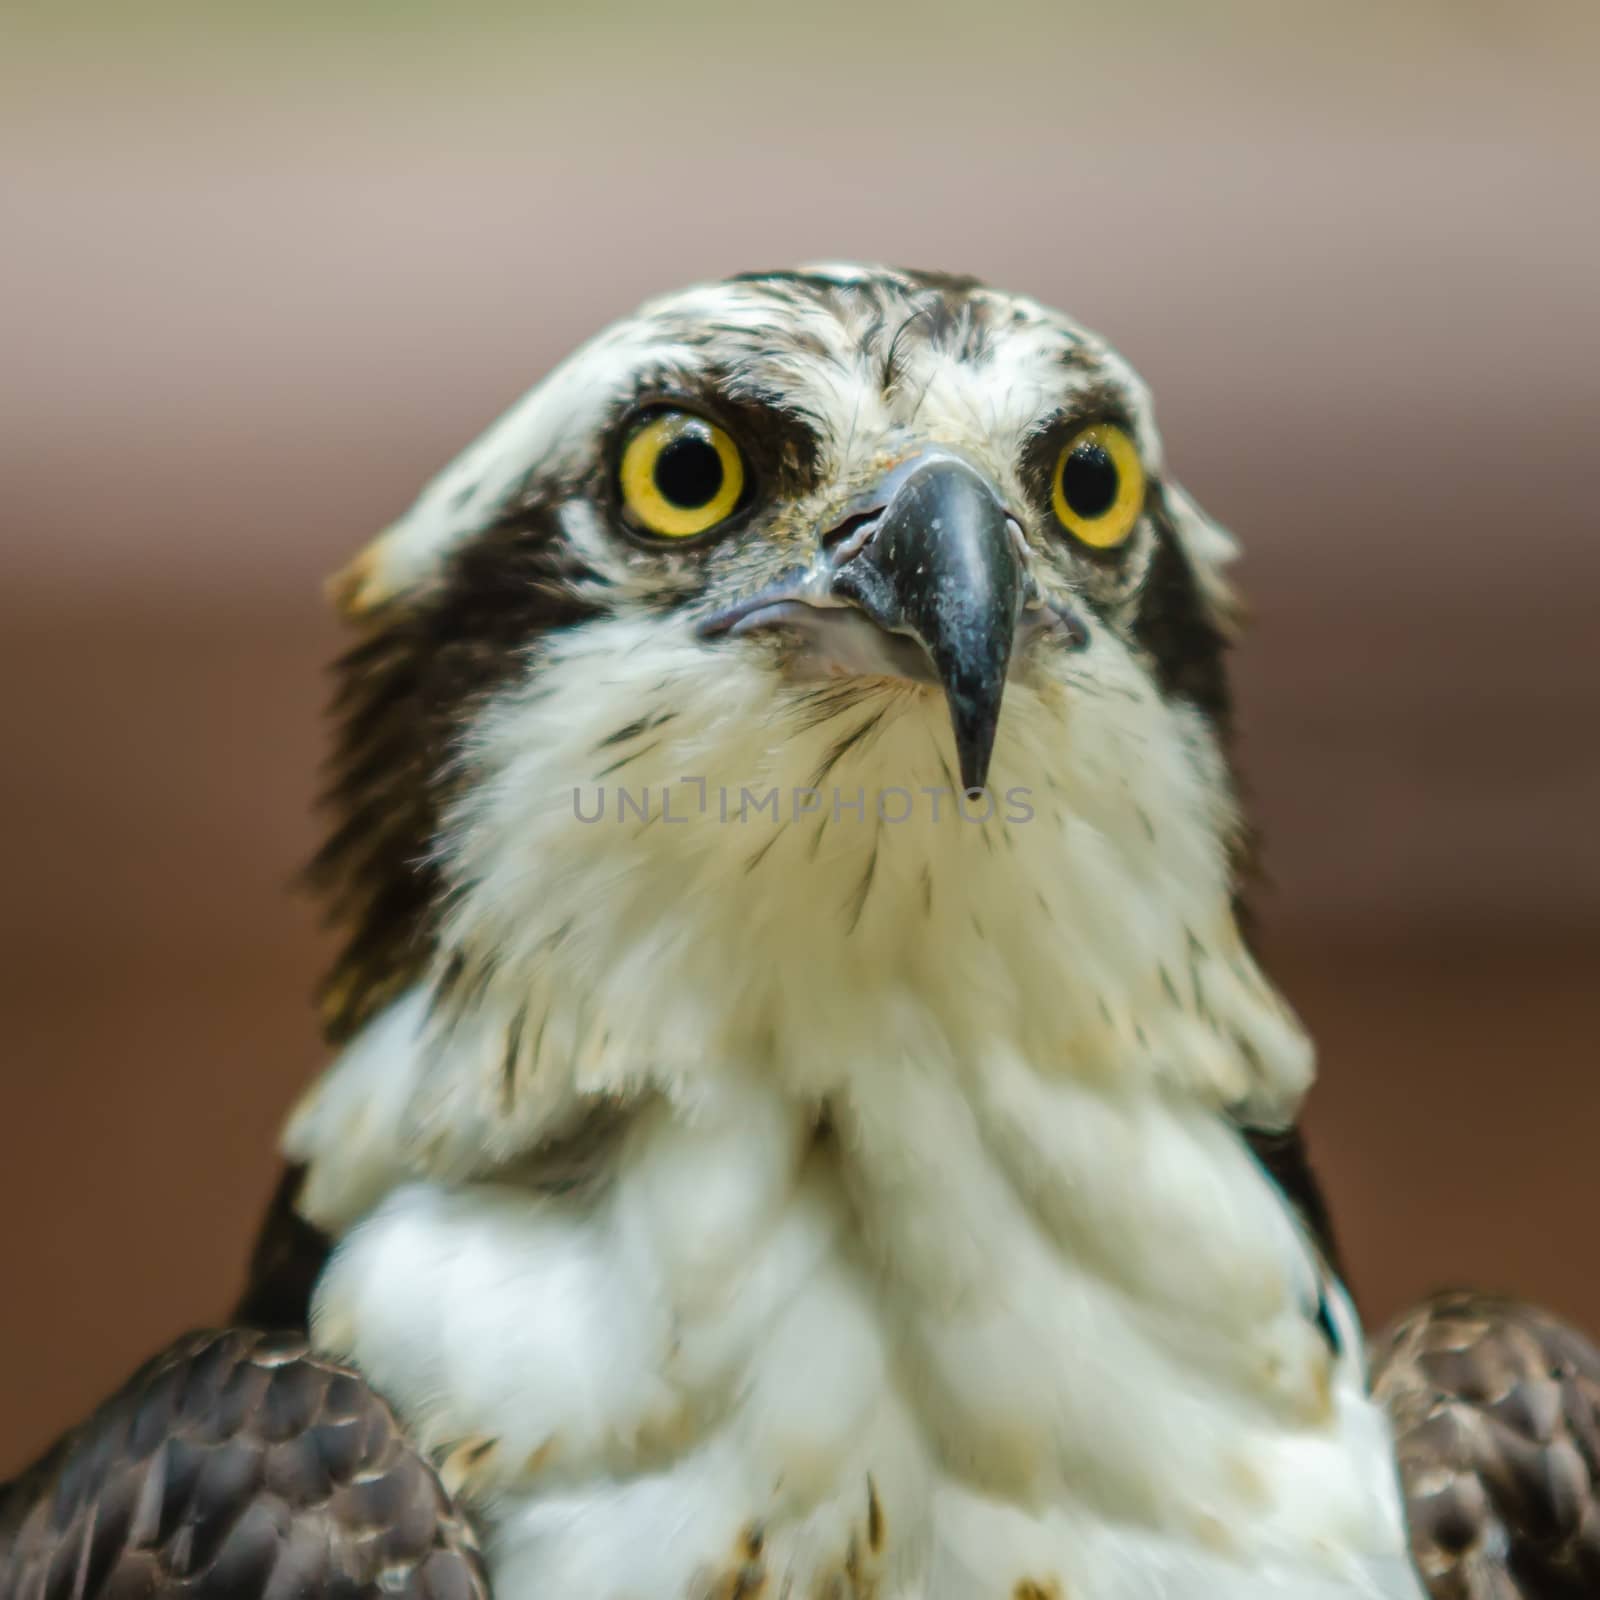 A beautiful closeup of a falcon by digidreamgrafix